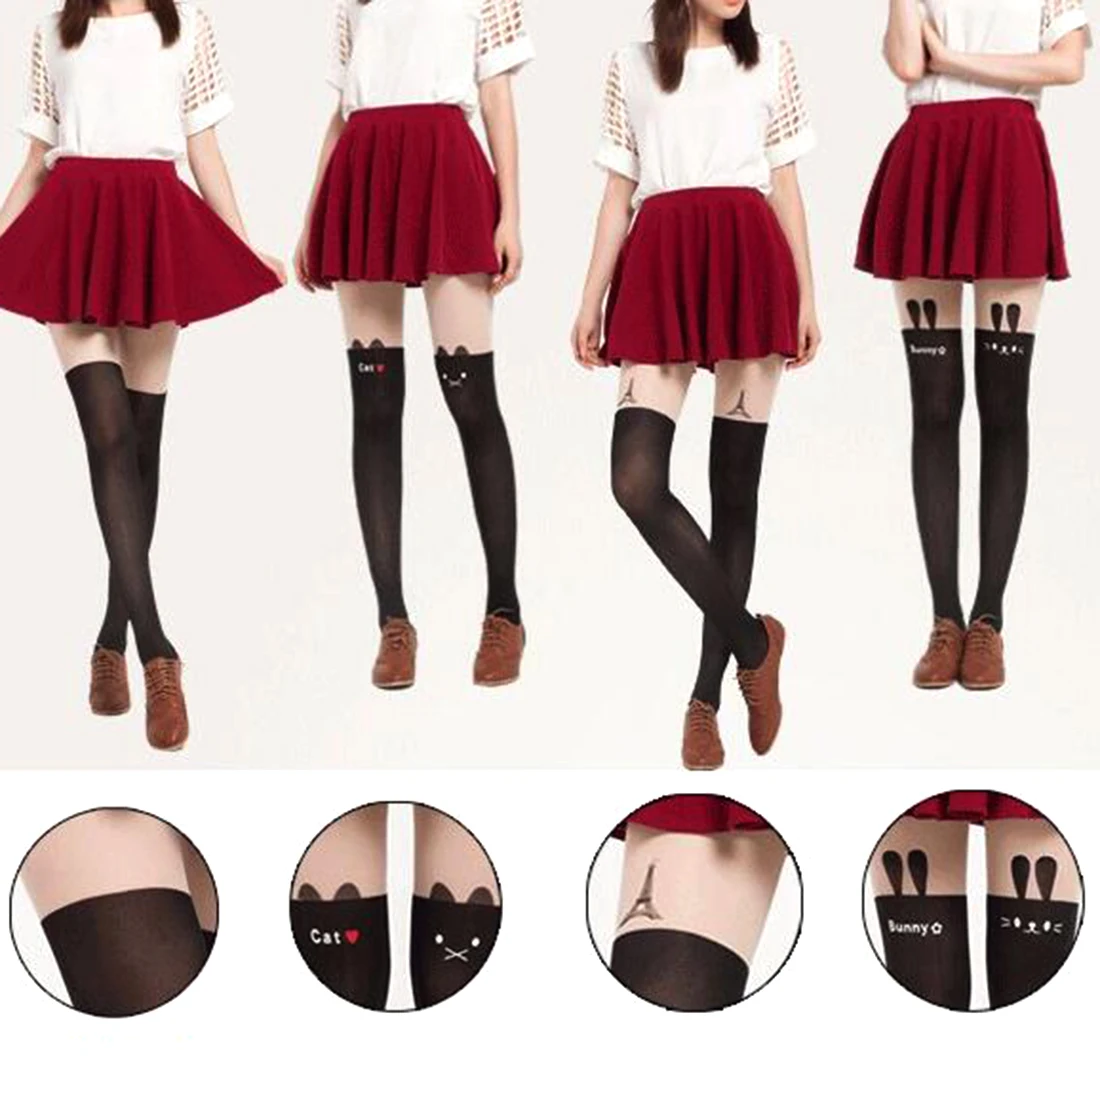 Aliexpress.com : Buy Girls Women Tights Pantyhose Design Stockings ...